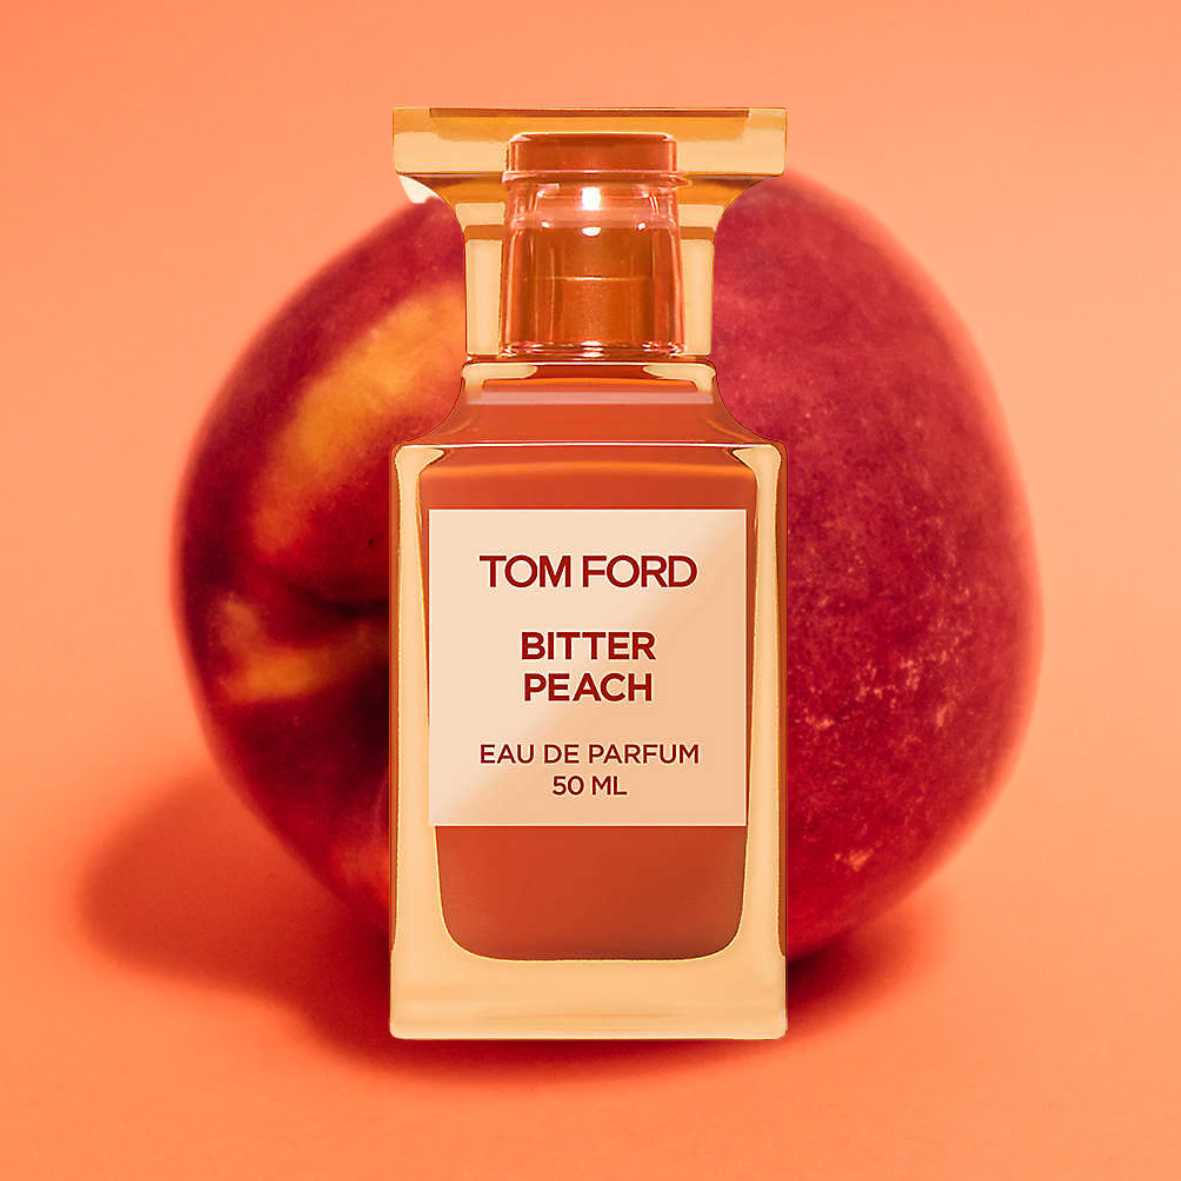 Tom Ford Bitter Peach น้ำหอมพีชที่ดีที่สุด